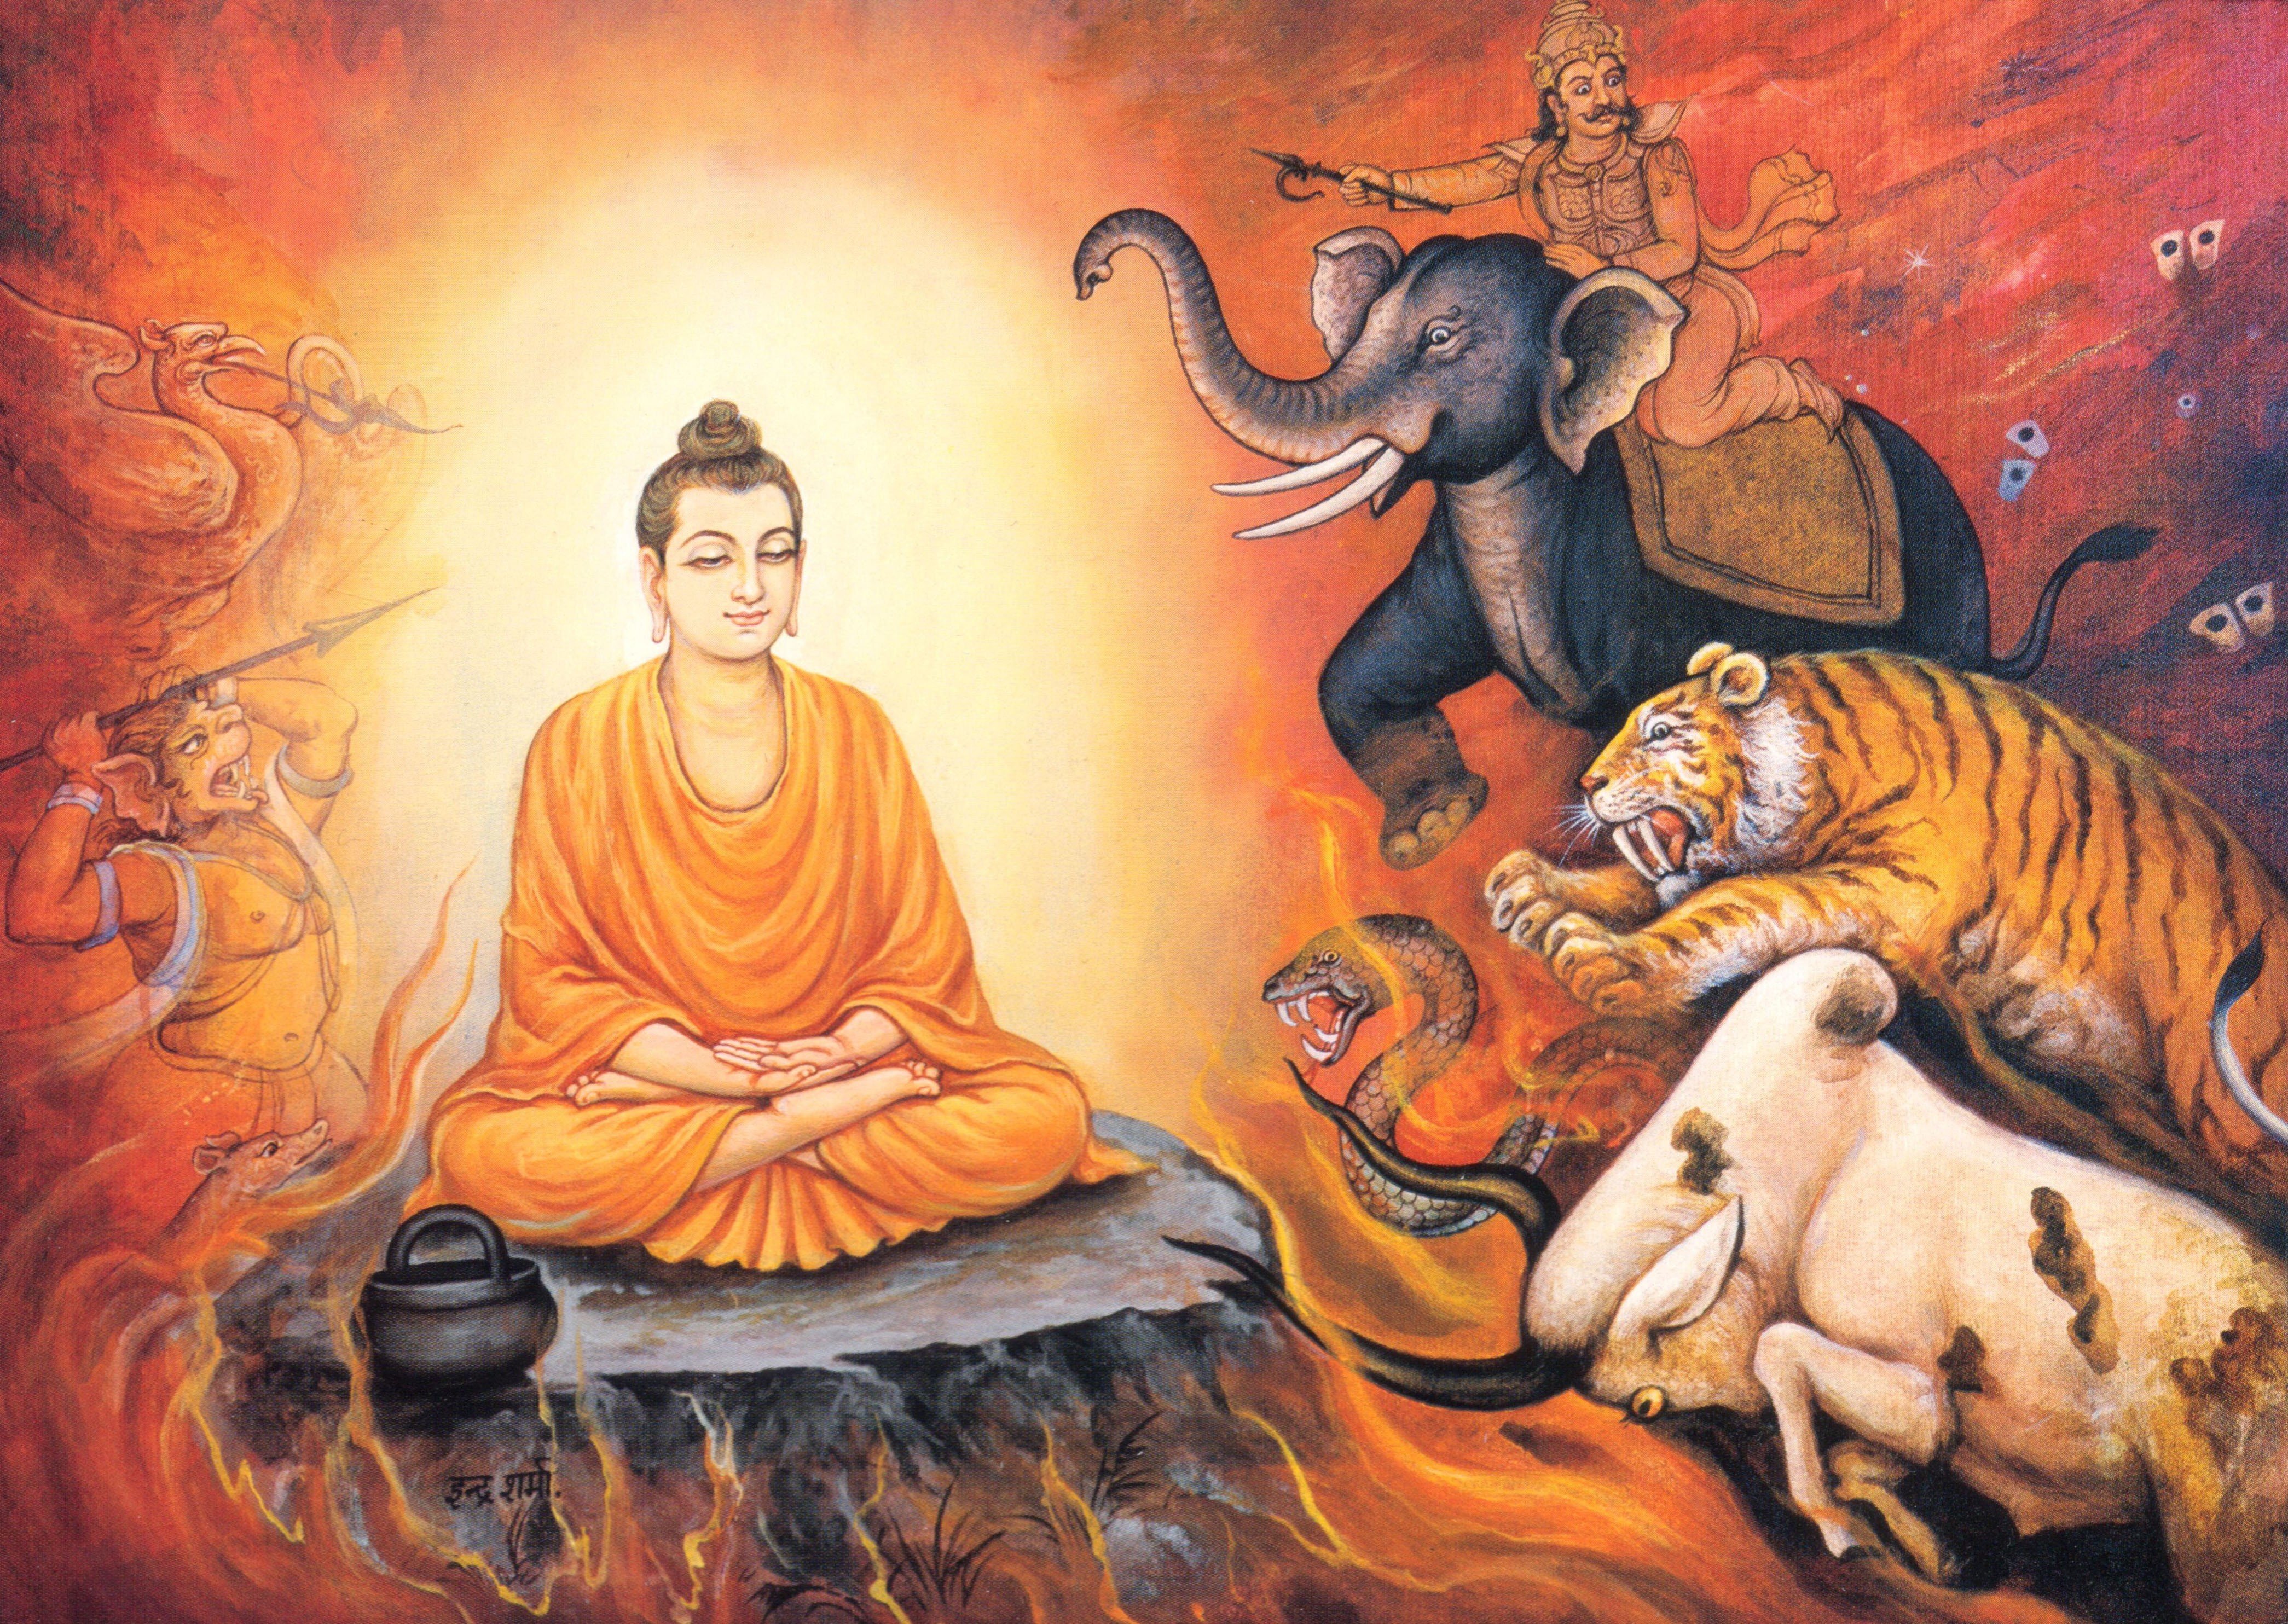 buddha enlightenment